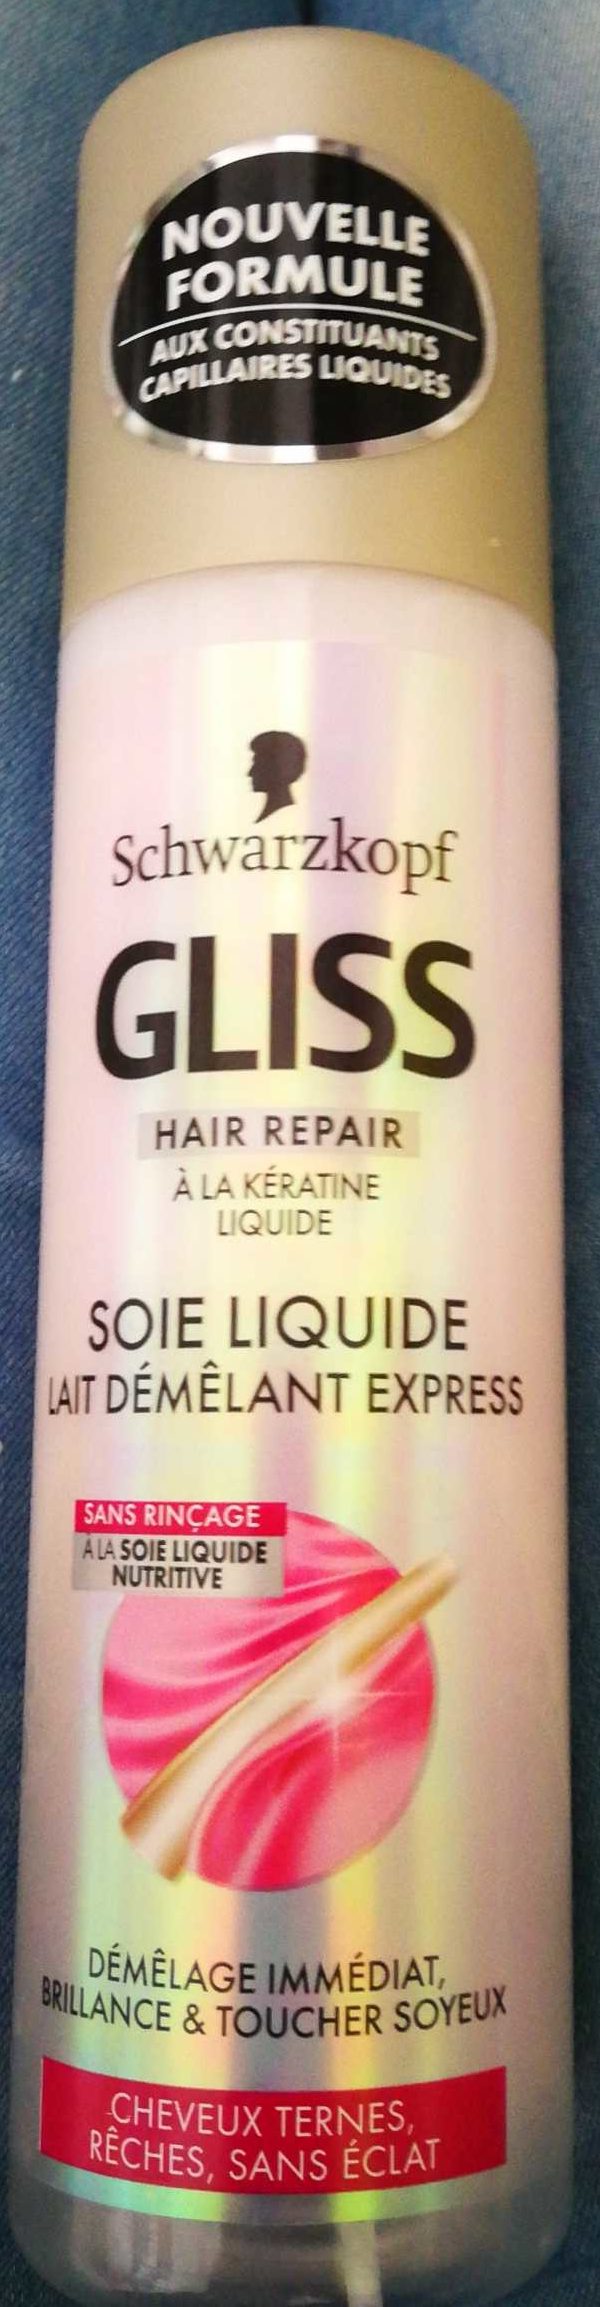 Gliss Soie liquide - Product - fr